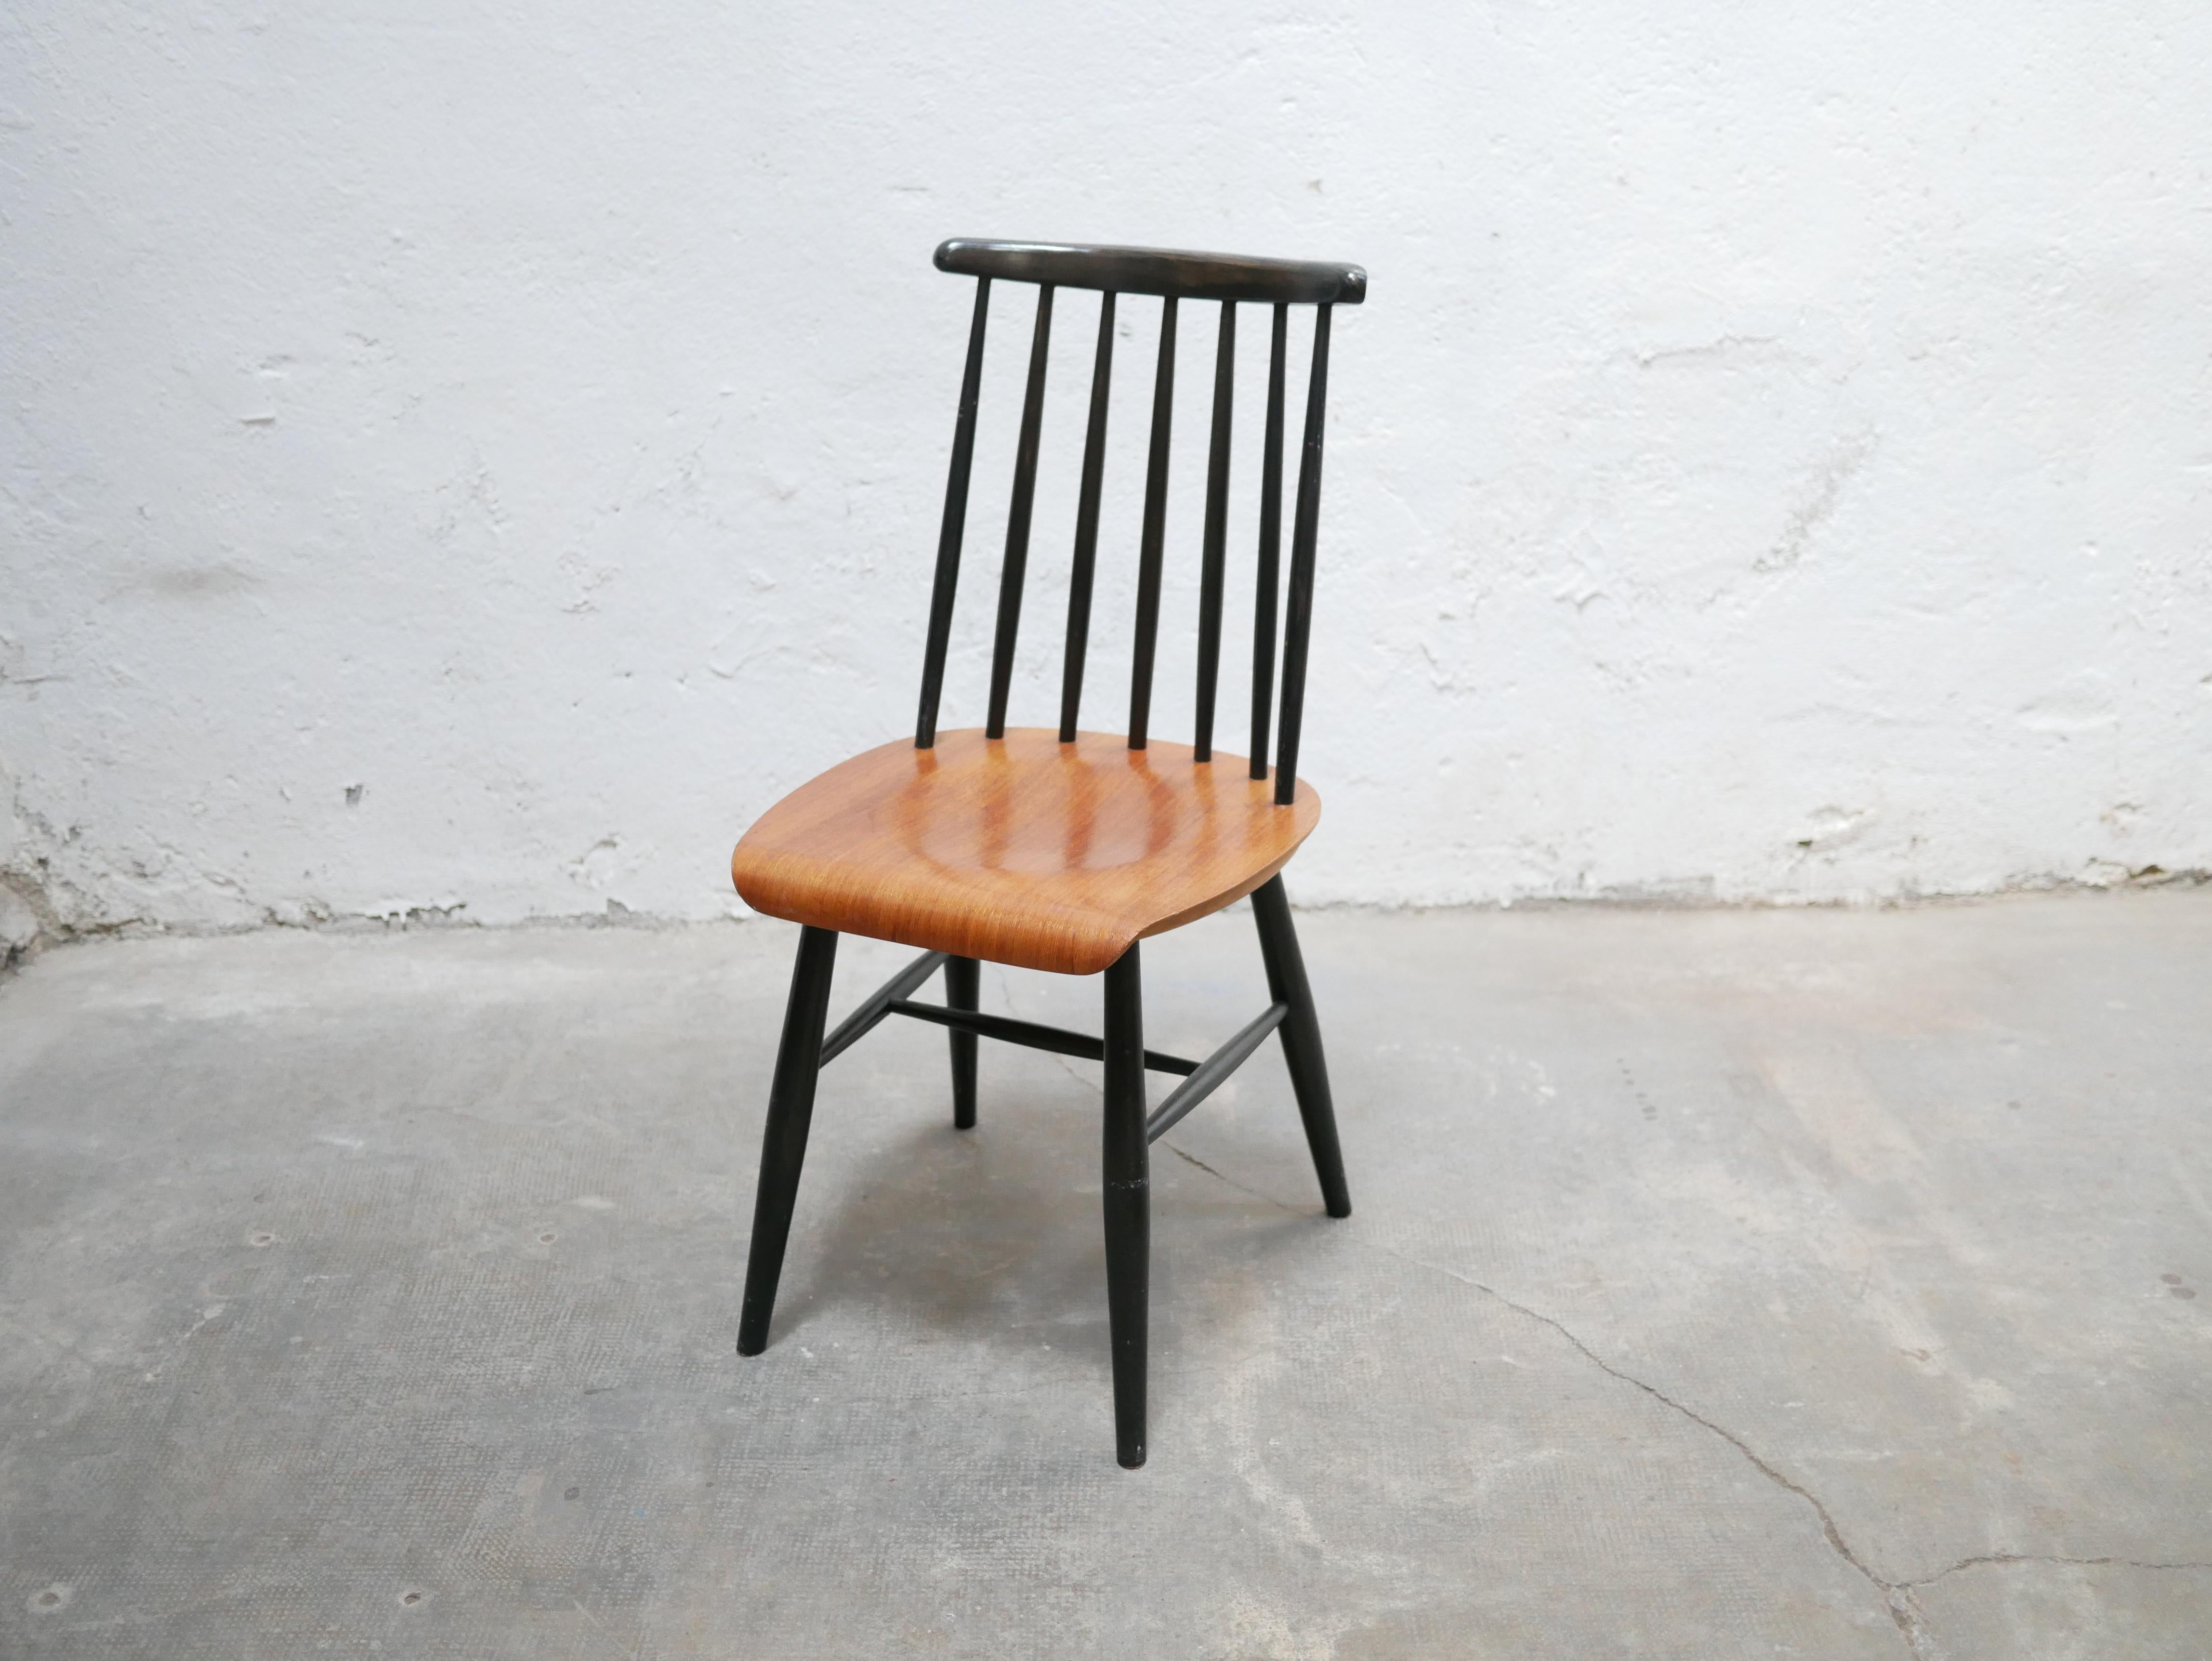 Vintage Scandinavian chair by I.Tapiovaara model Fanett 2